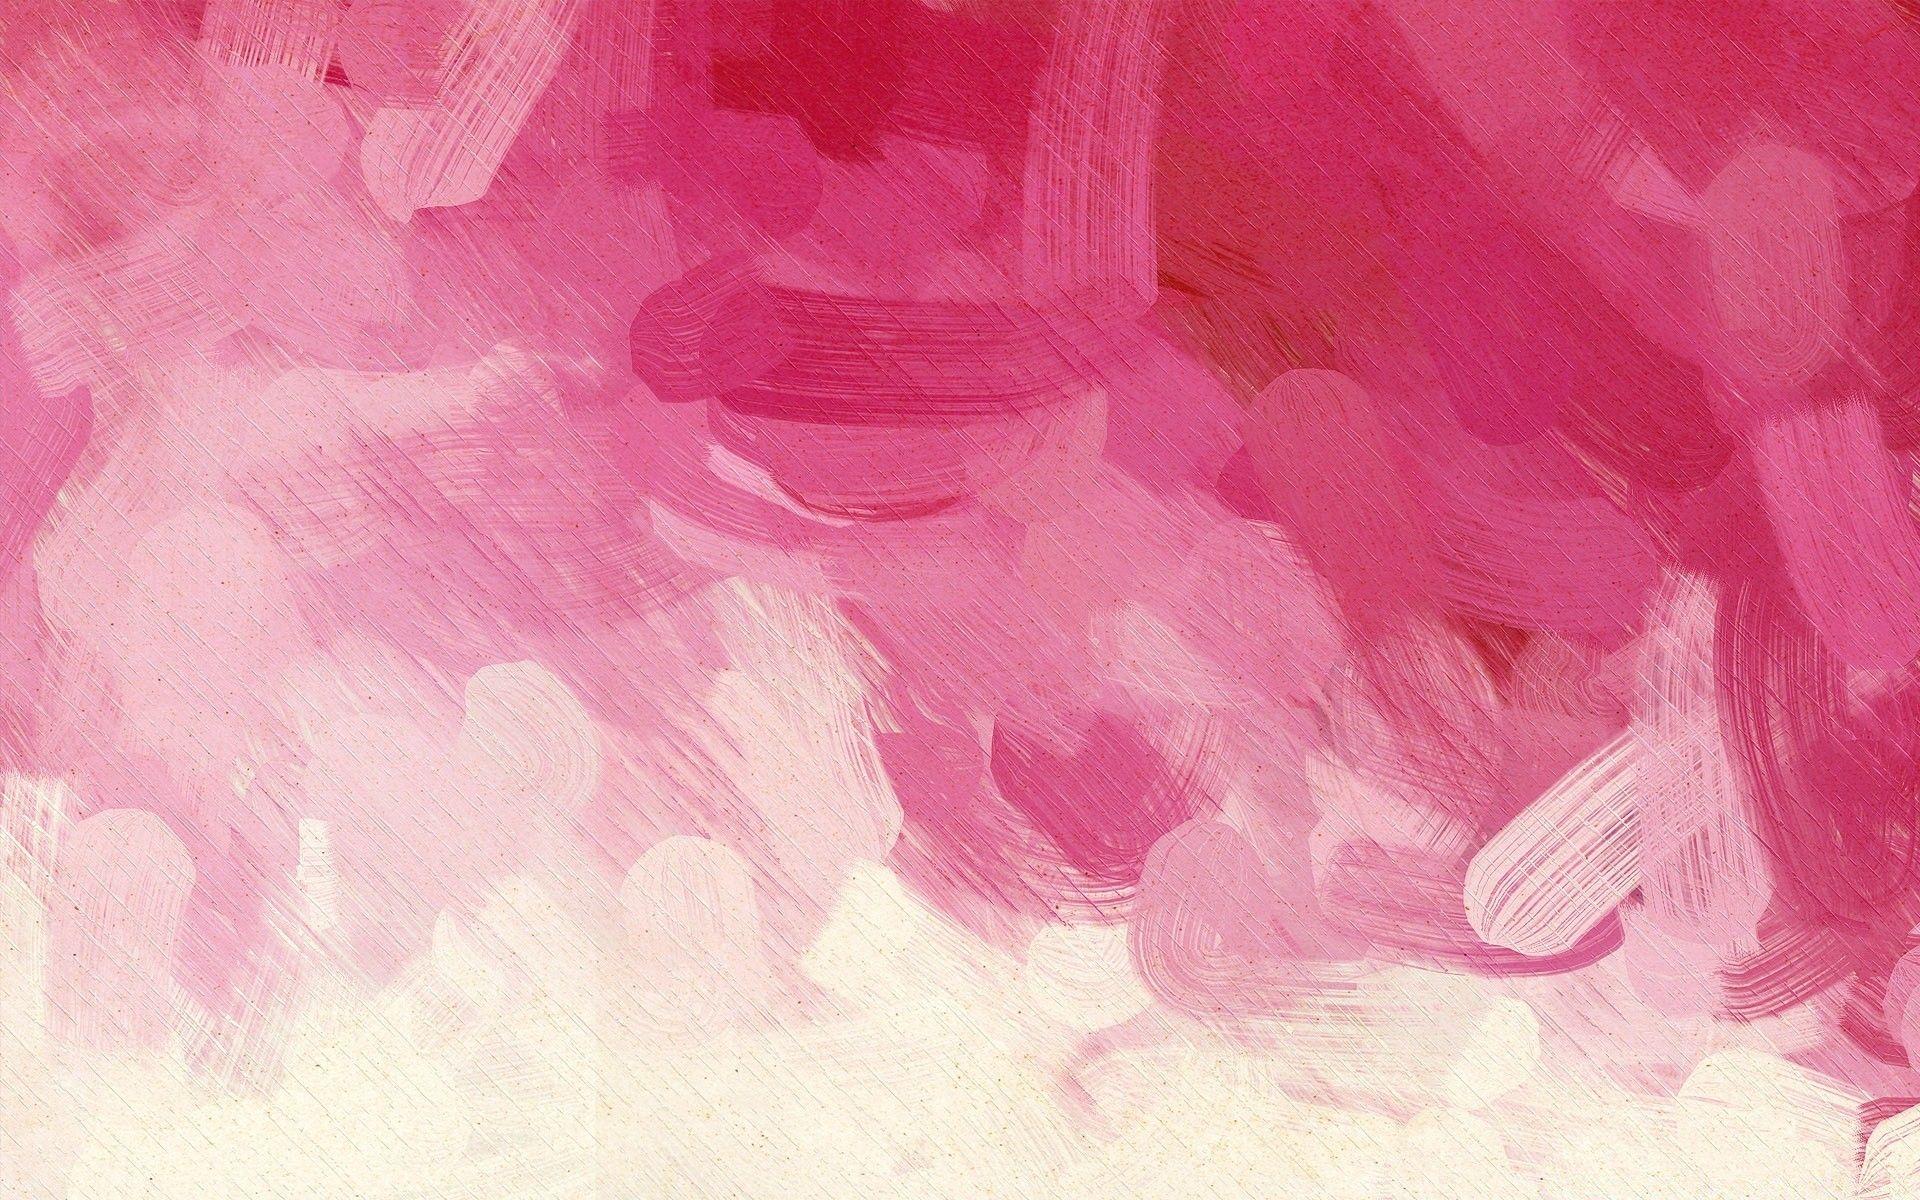 999 Pink Mac backgrounds Mẫu đẹp, phù hợp cho Macbook